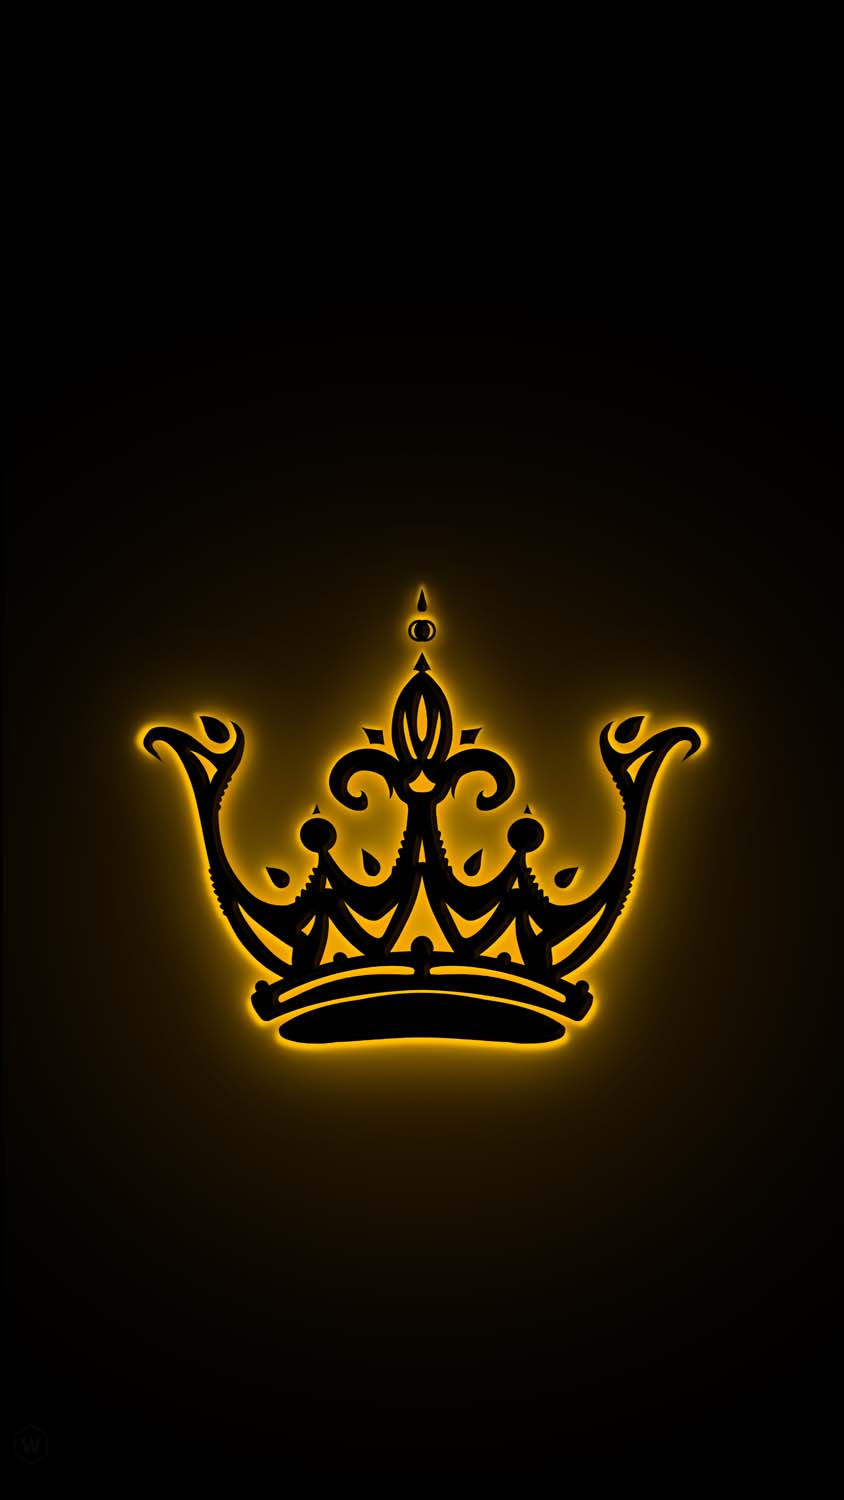 King Crown 4K IPhone Wallpaper HD - IPhone Wallpapers : iPhone Wallpapers